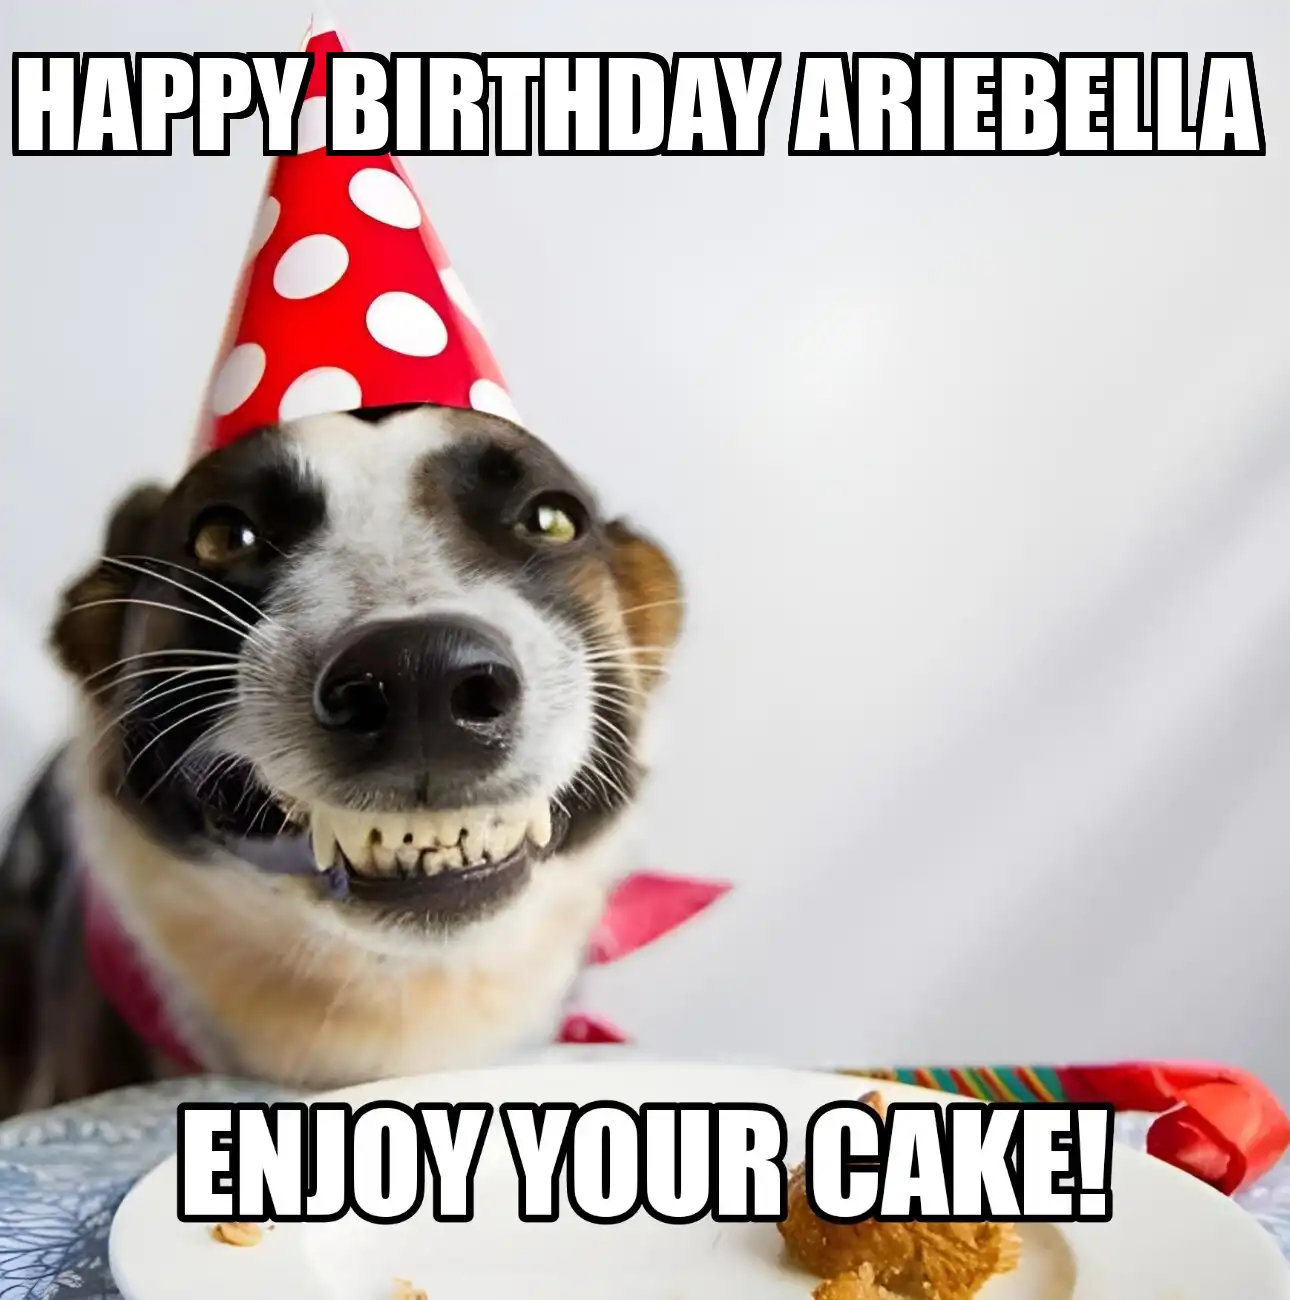 Happy Birthday Ariebella Enjoy Your Cake Dog Meme